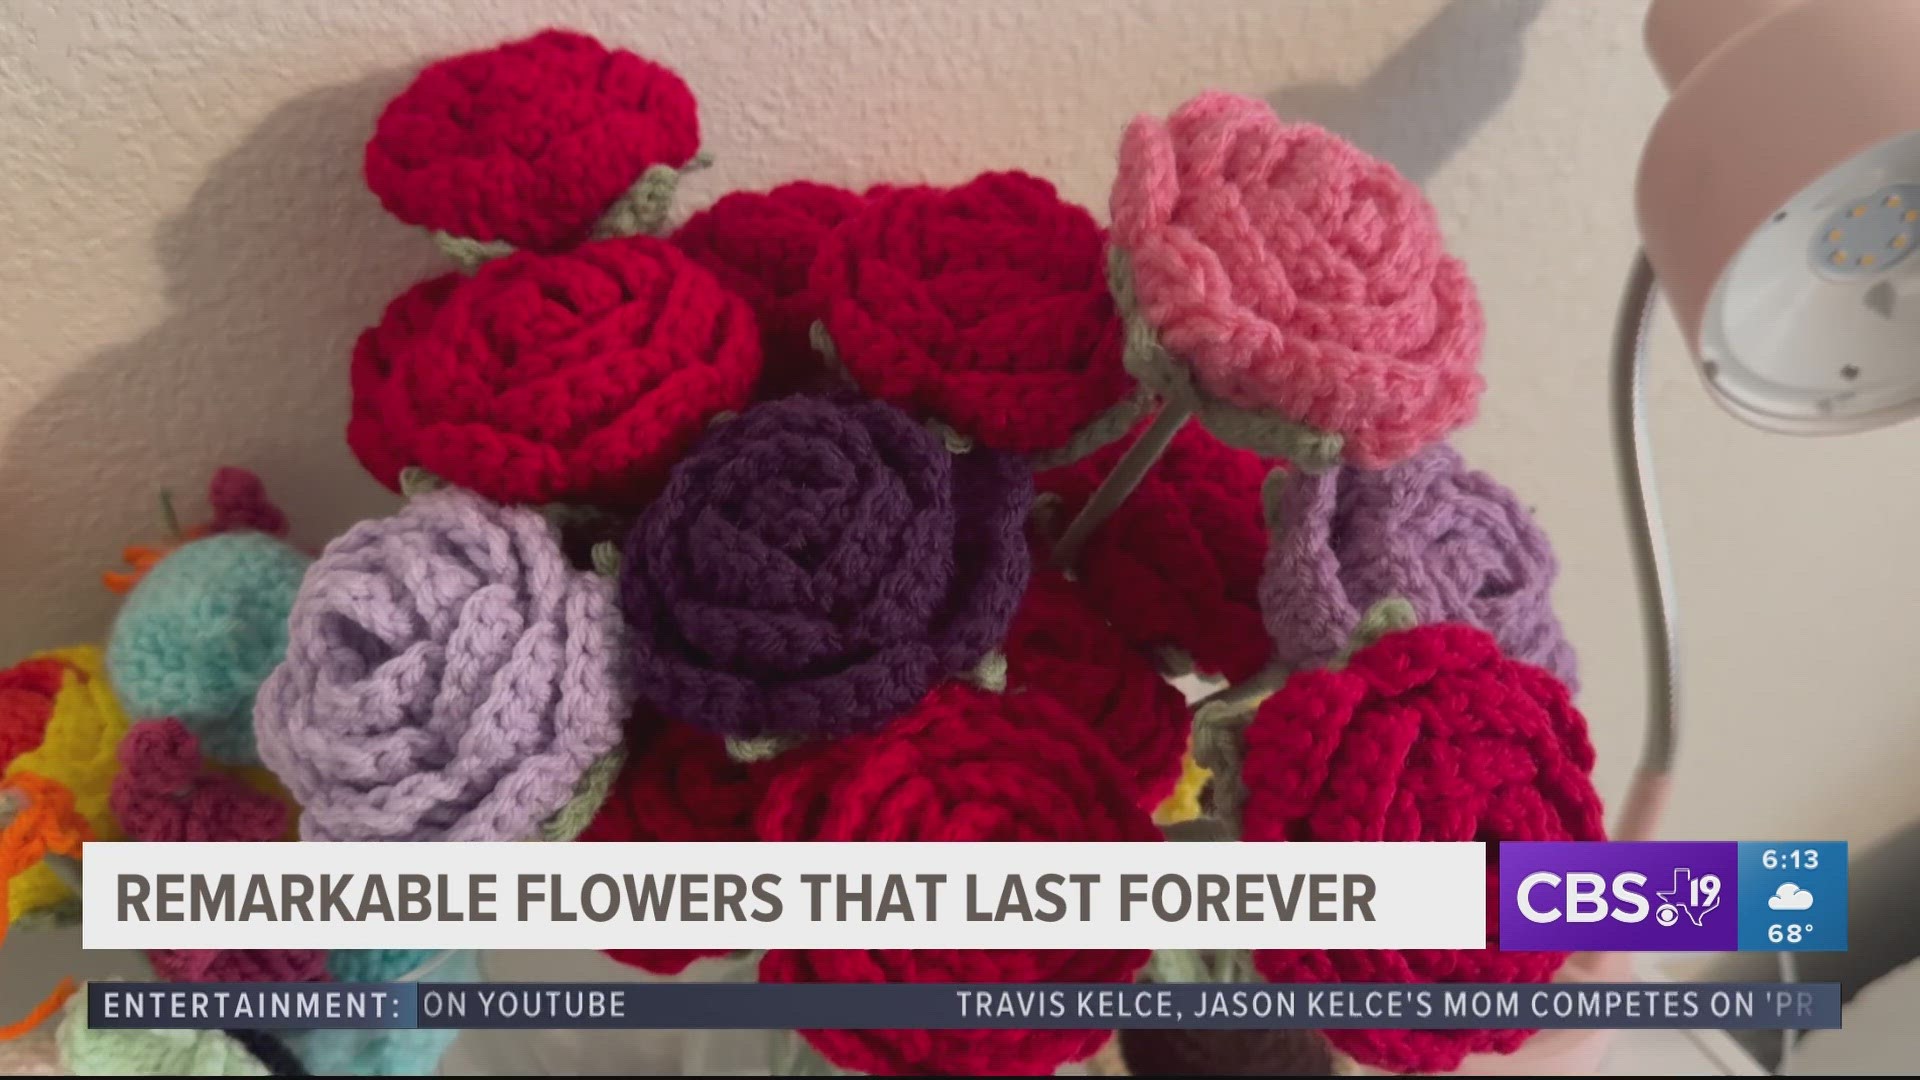 East Texas artist creates 'everlasting flower' through crocheting skills for unique Valentine's Day gift